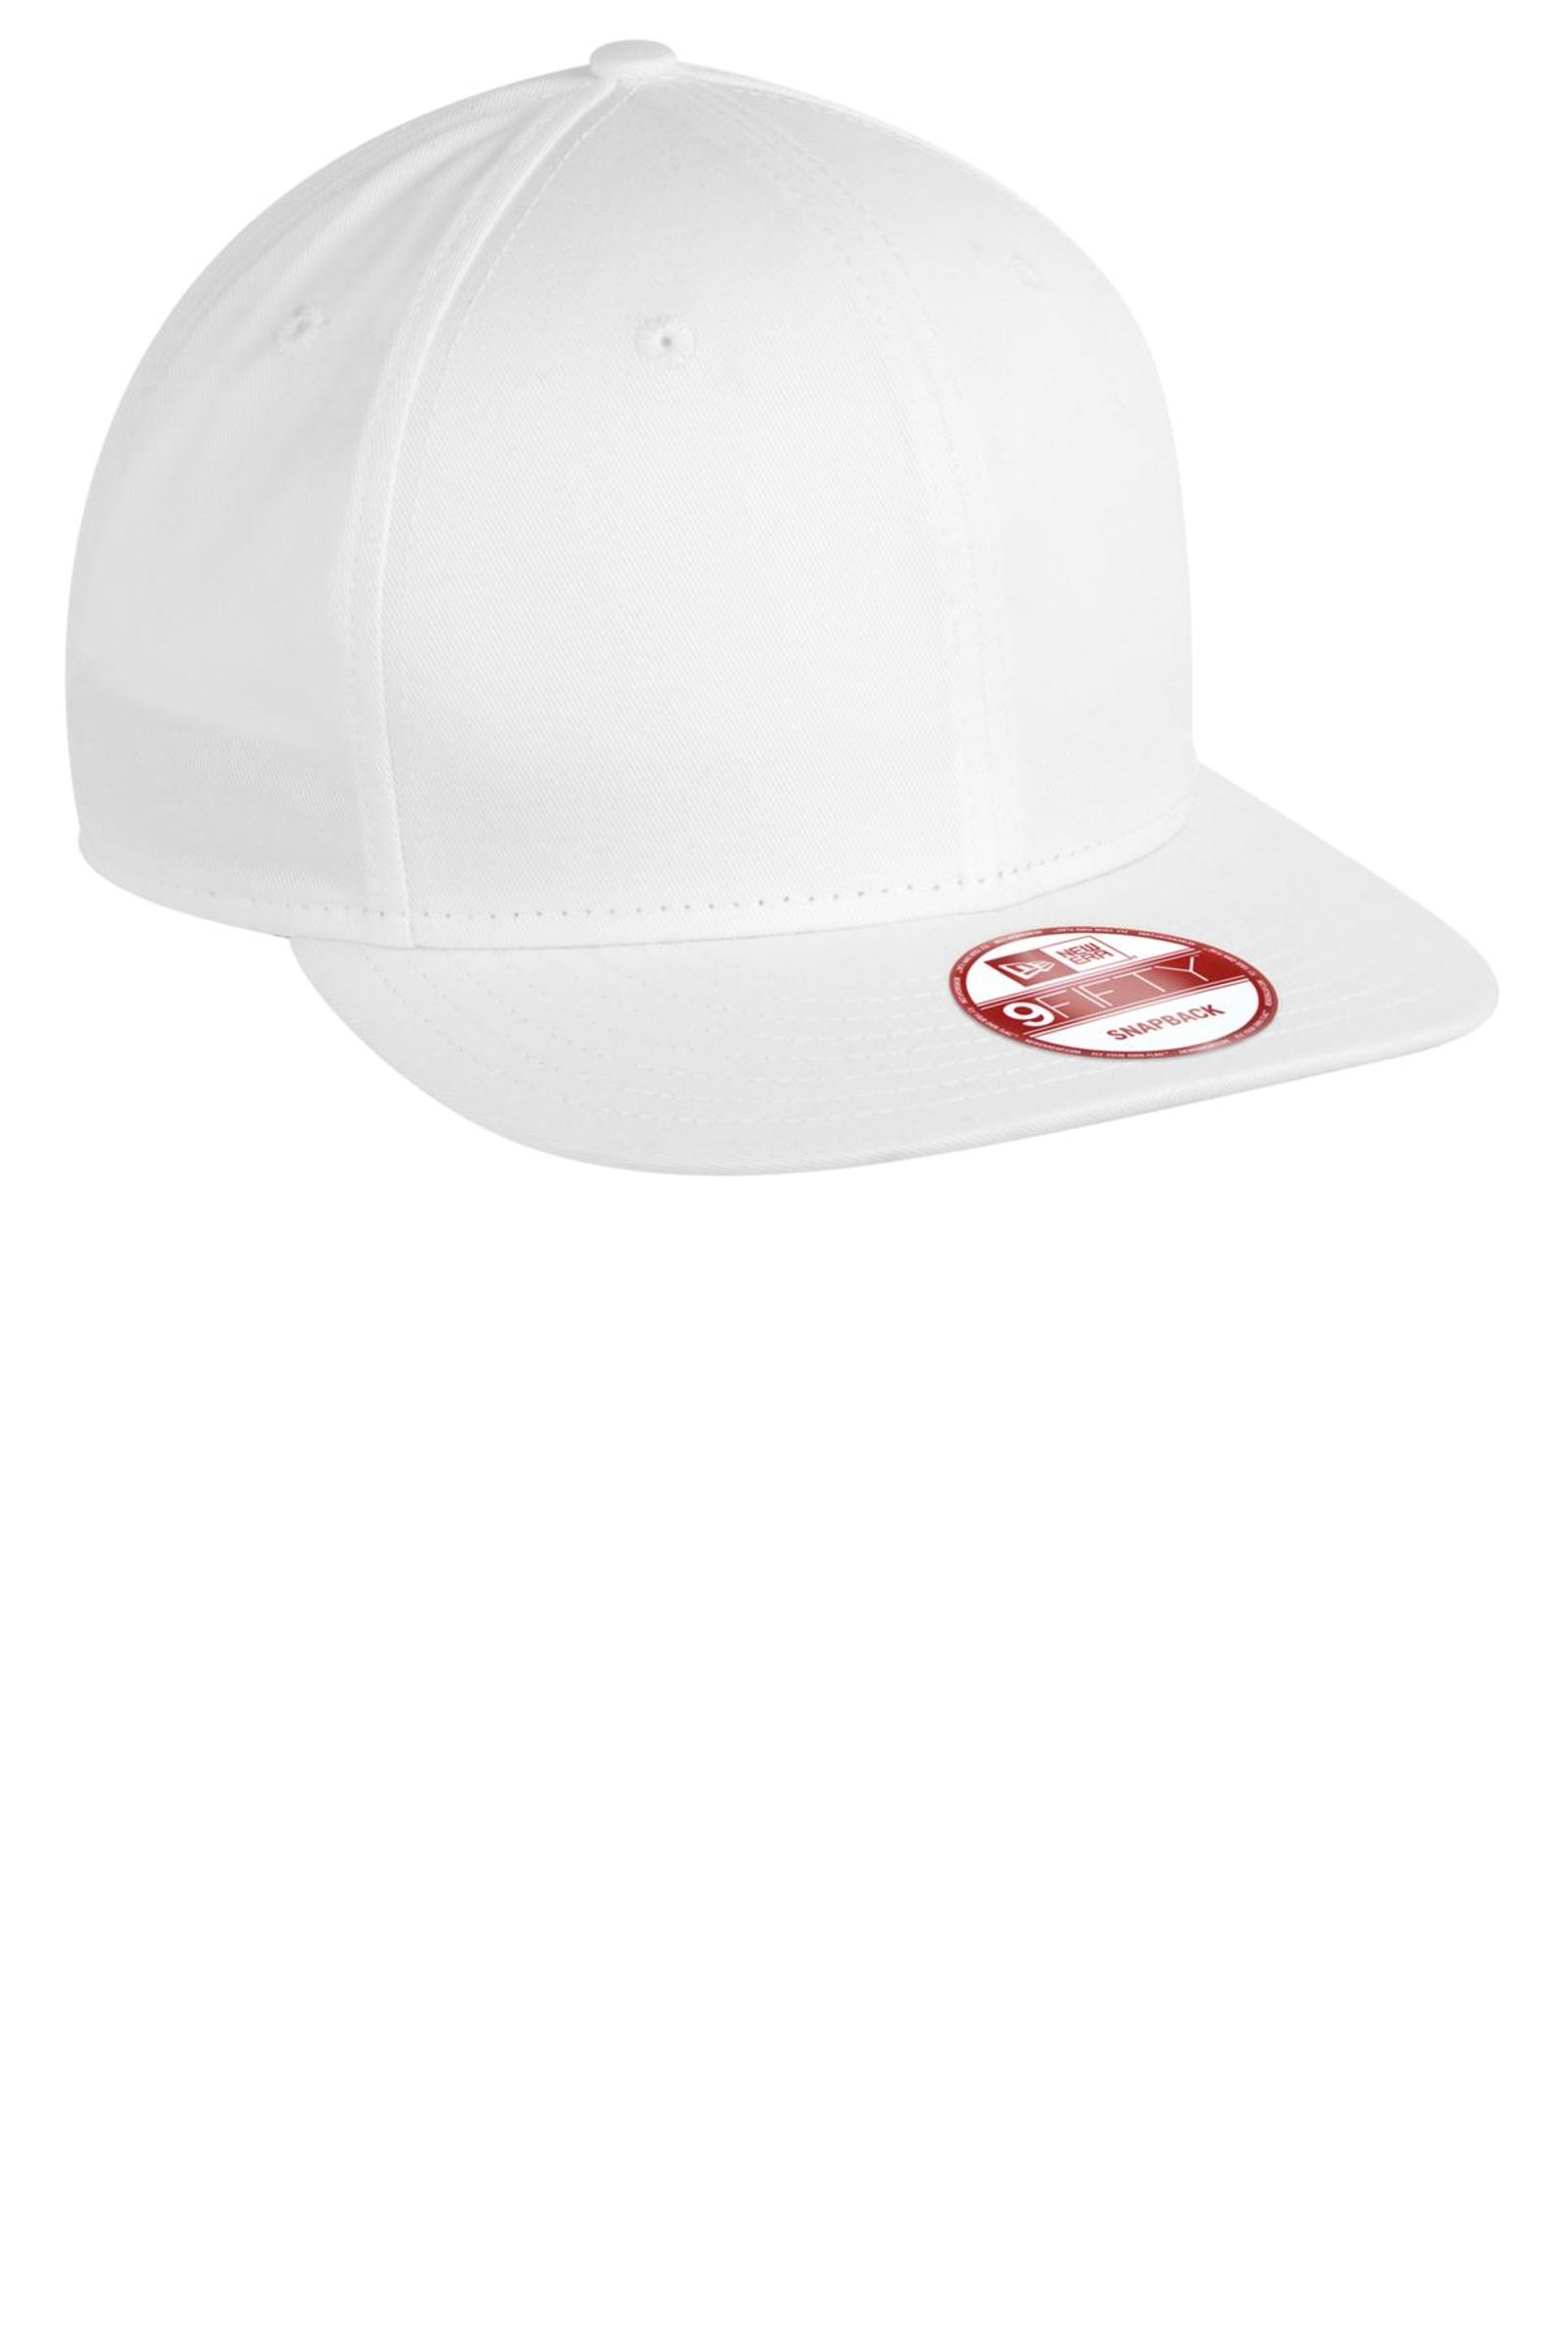 Sample - New Era 9FIFTY Flat Bill Snapback Hat - White